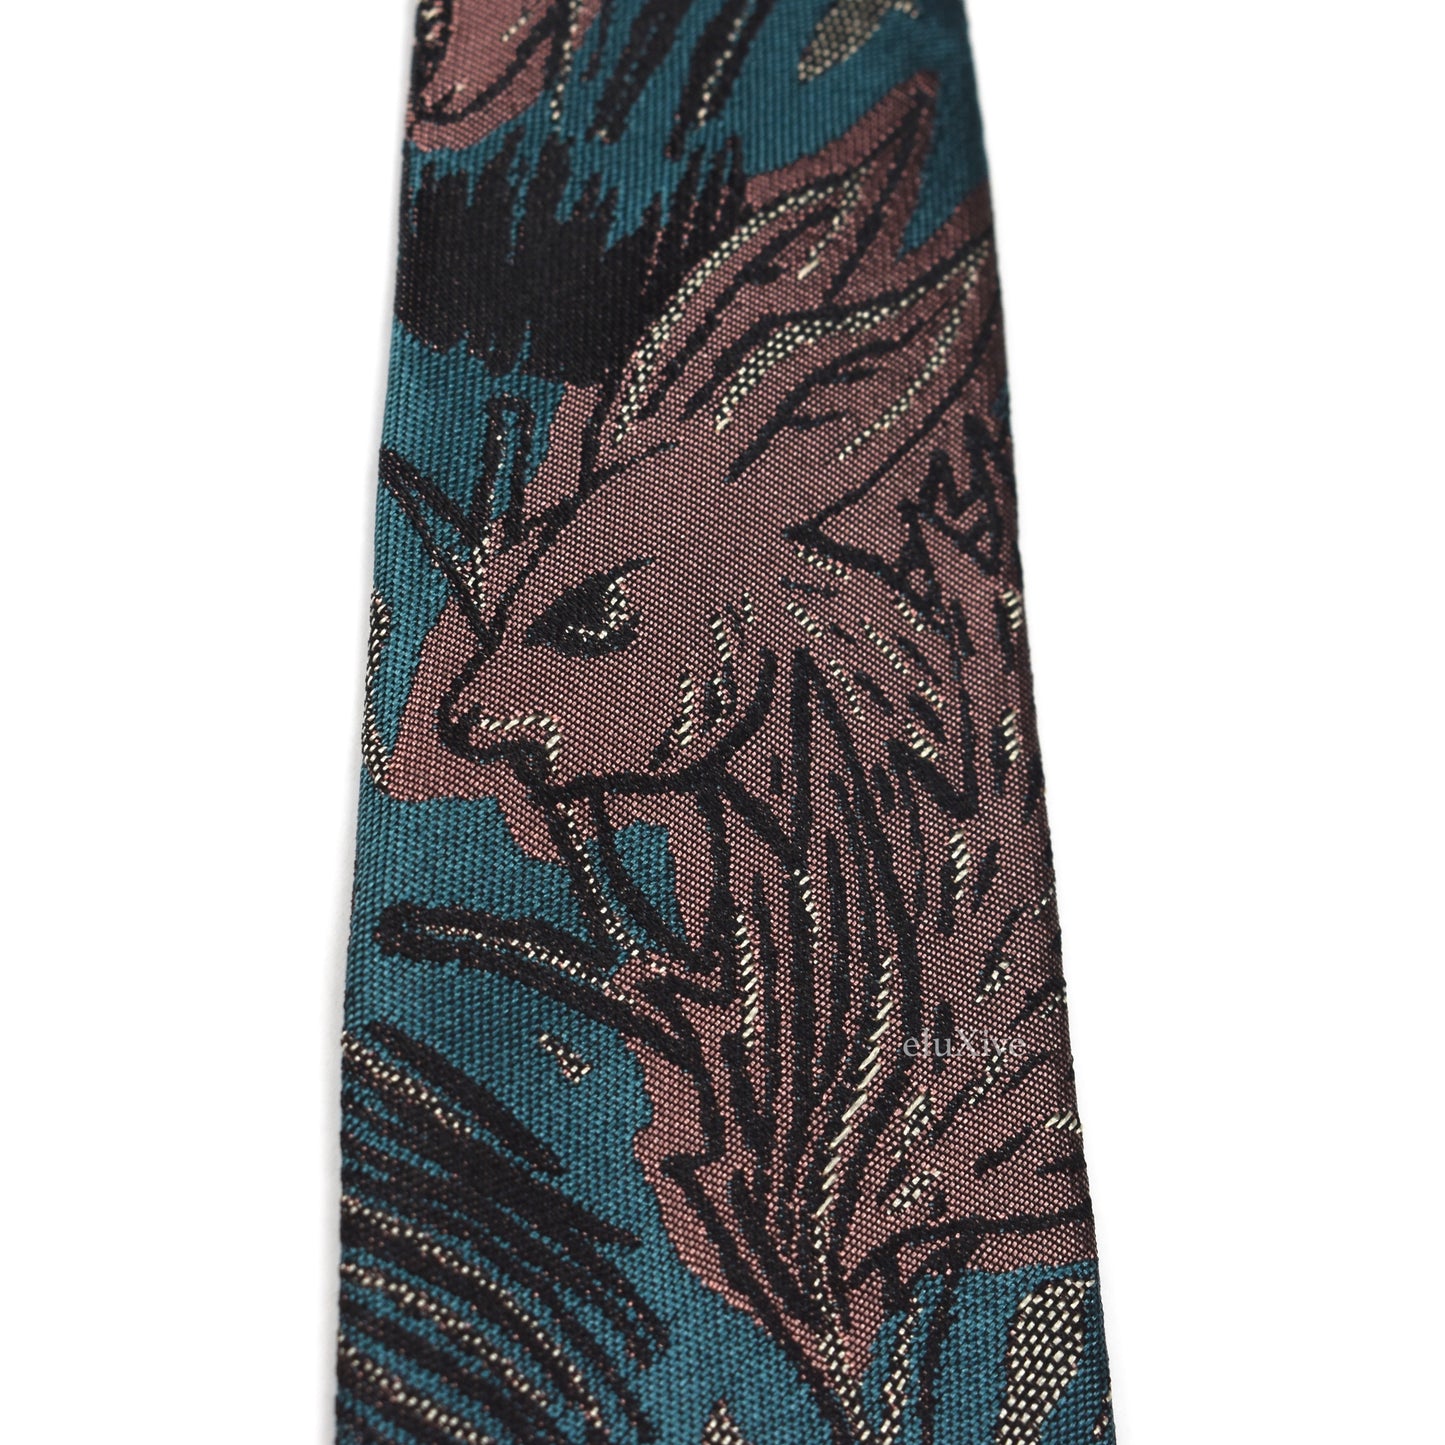 Burberry - Woven Animal Artwork Tie (Turquoise)